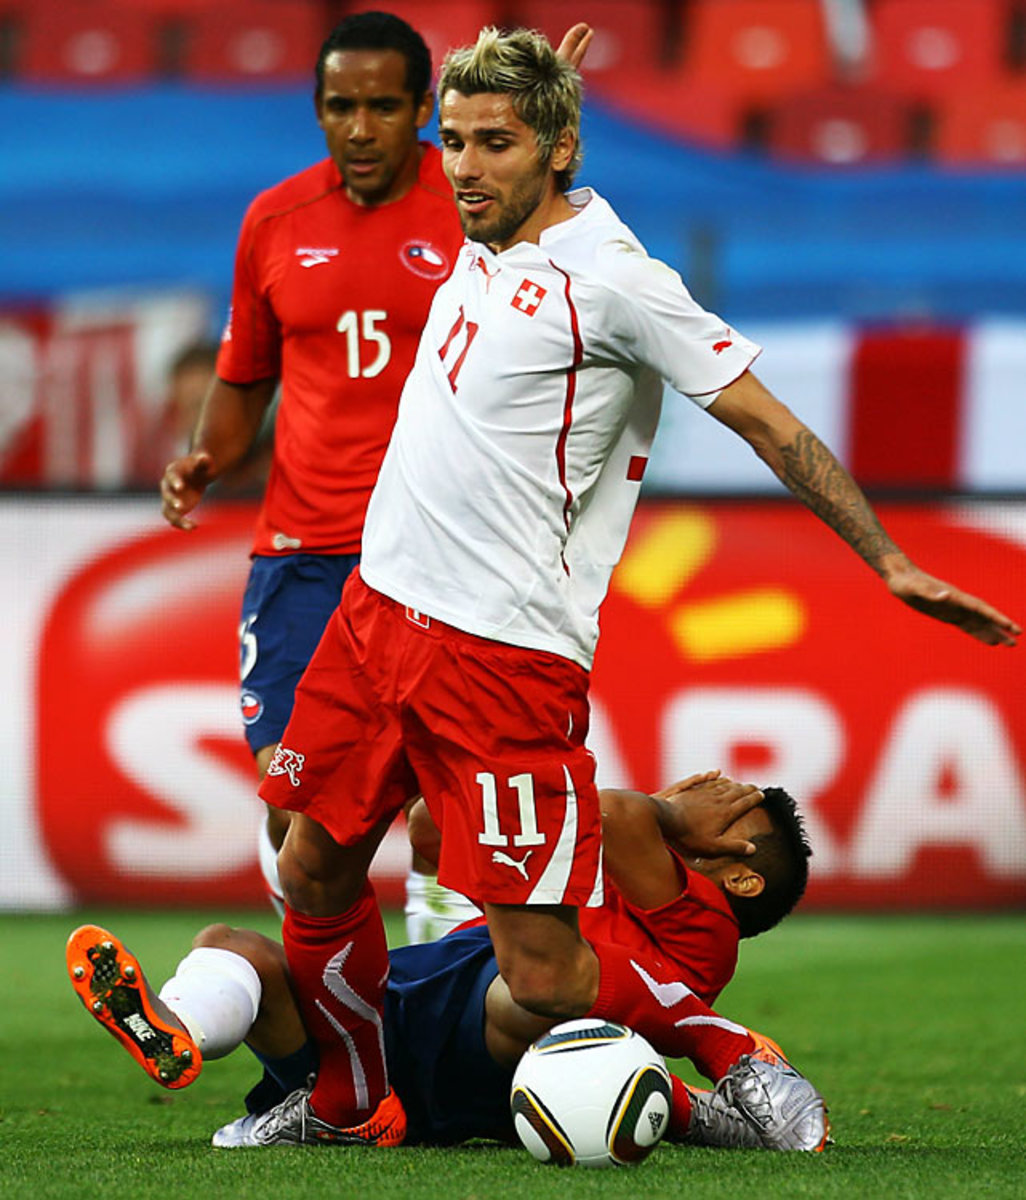 Chile 1, Switzerland 0